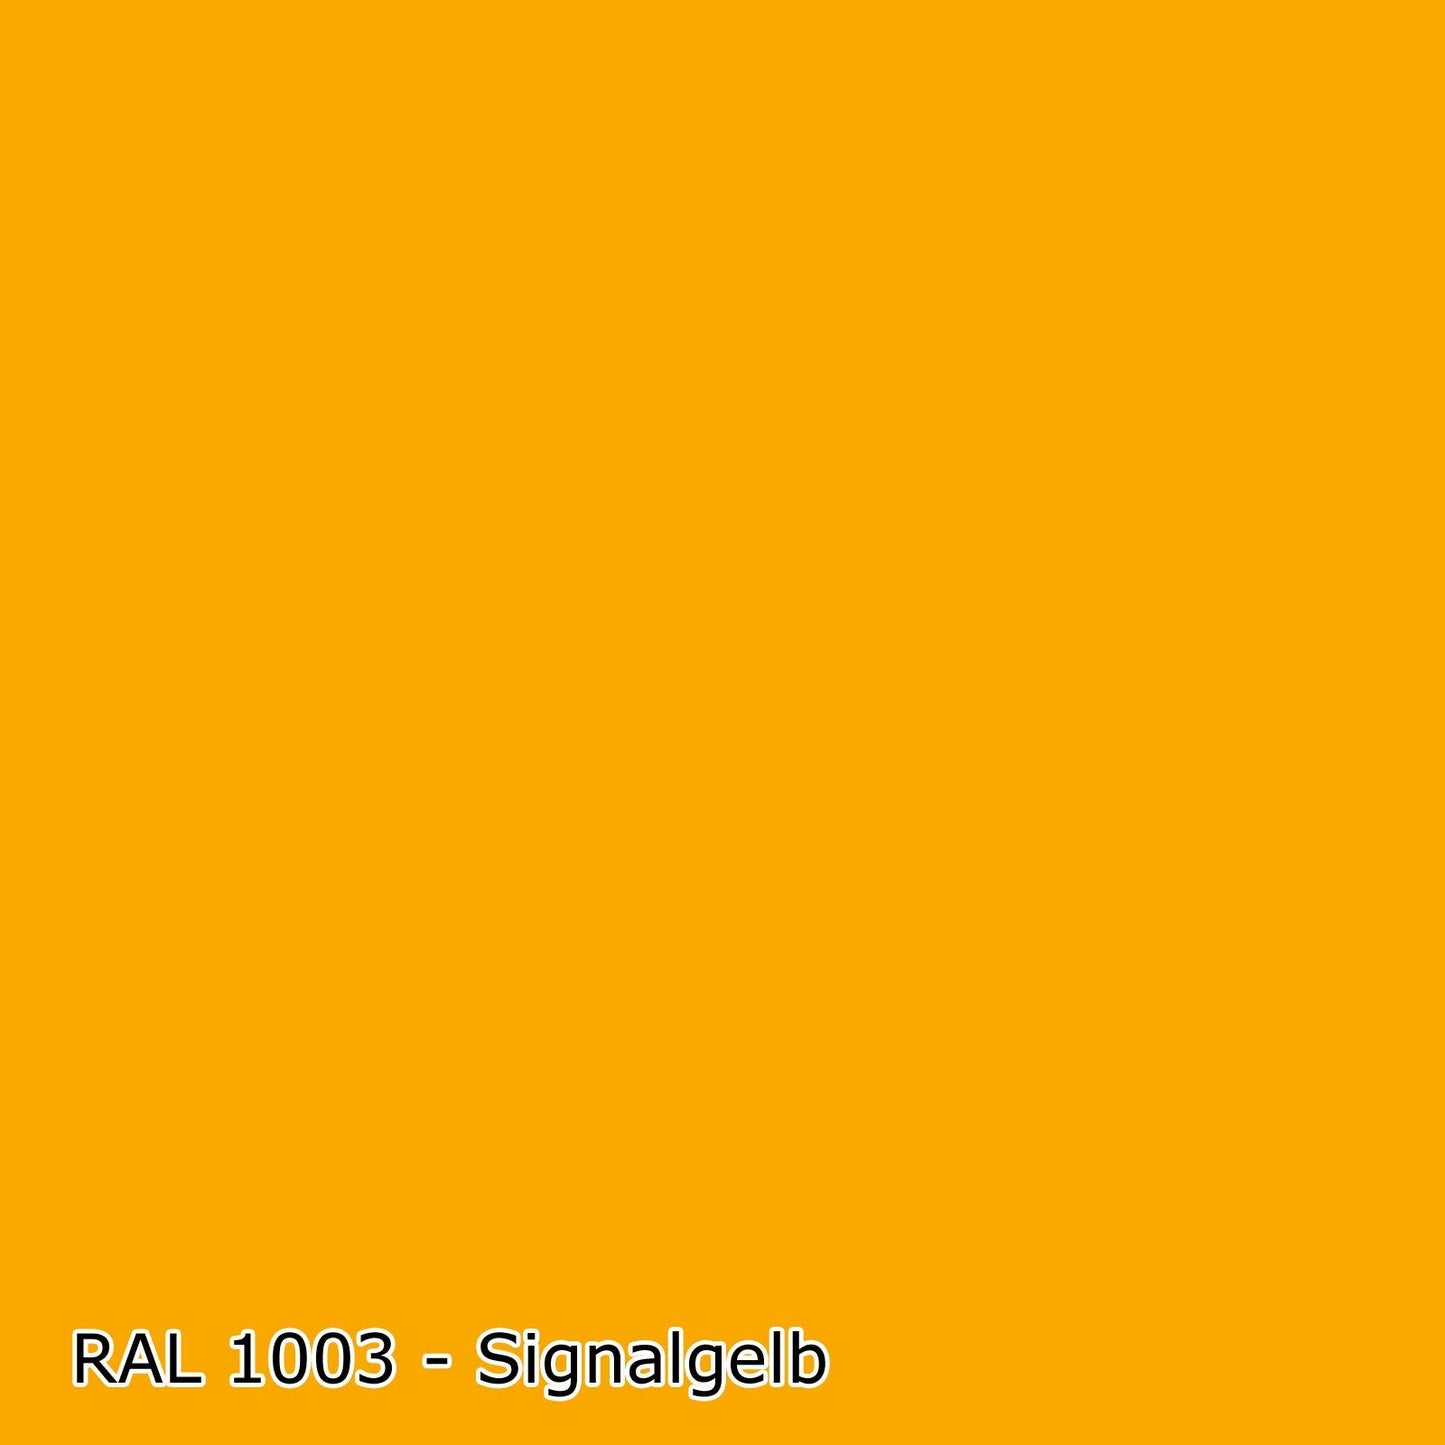 1 L Buntlack, Kunstharzlack, RAL Farbwahl - SEIDENMATT (RAL 1000 - 6006)